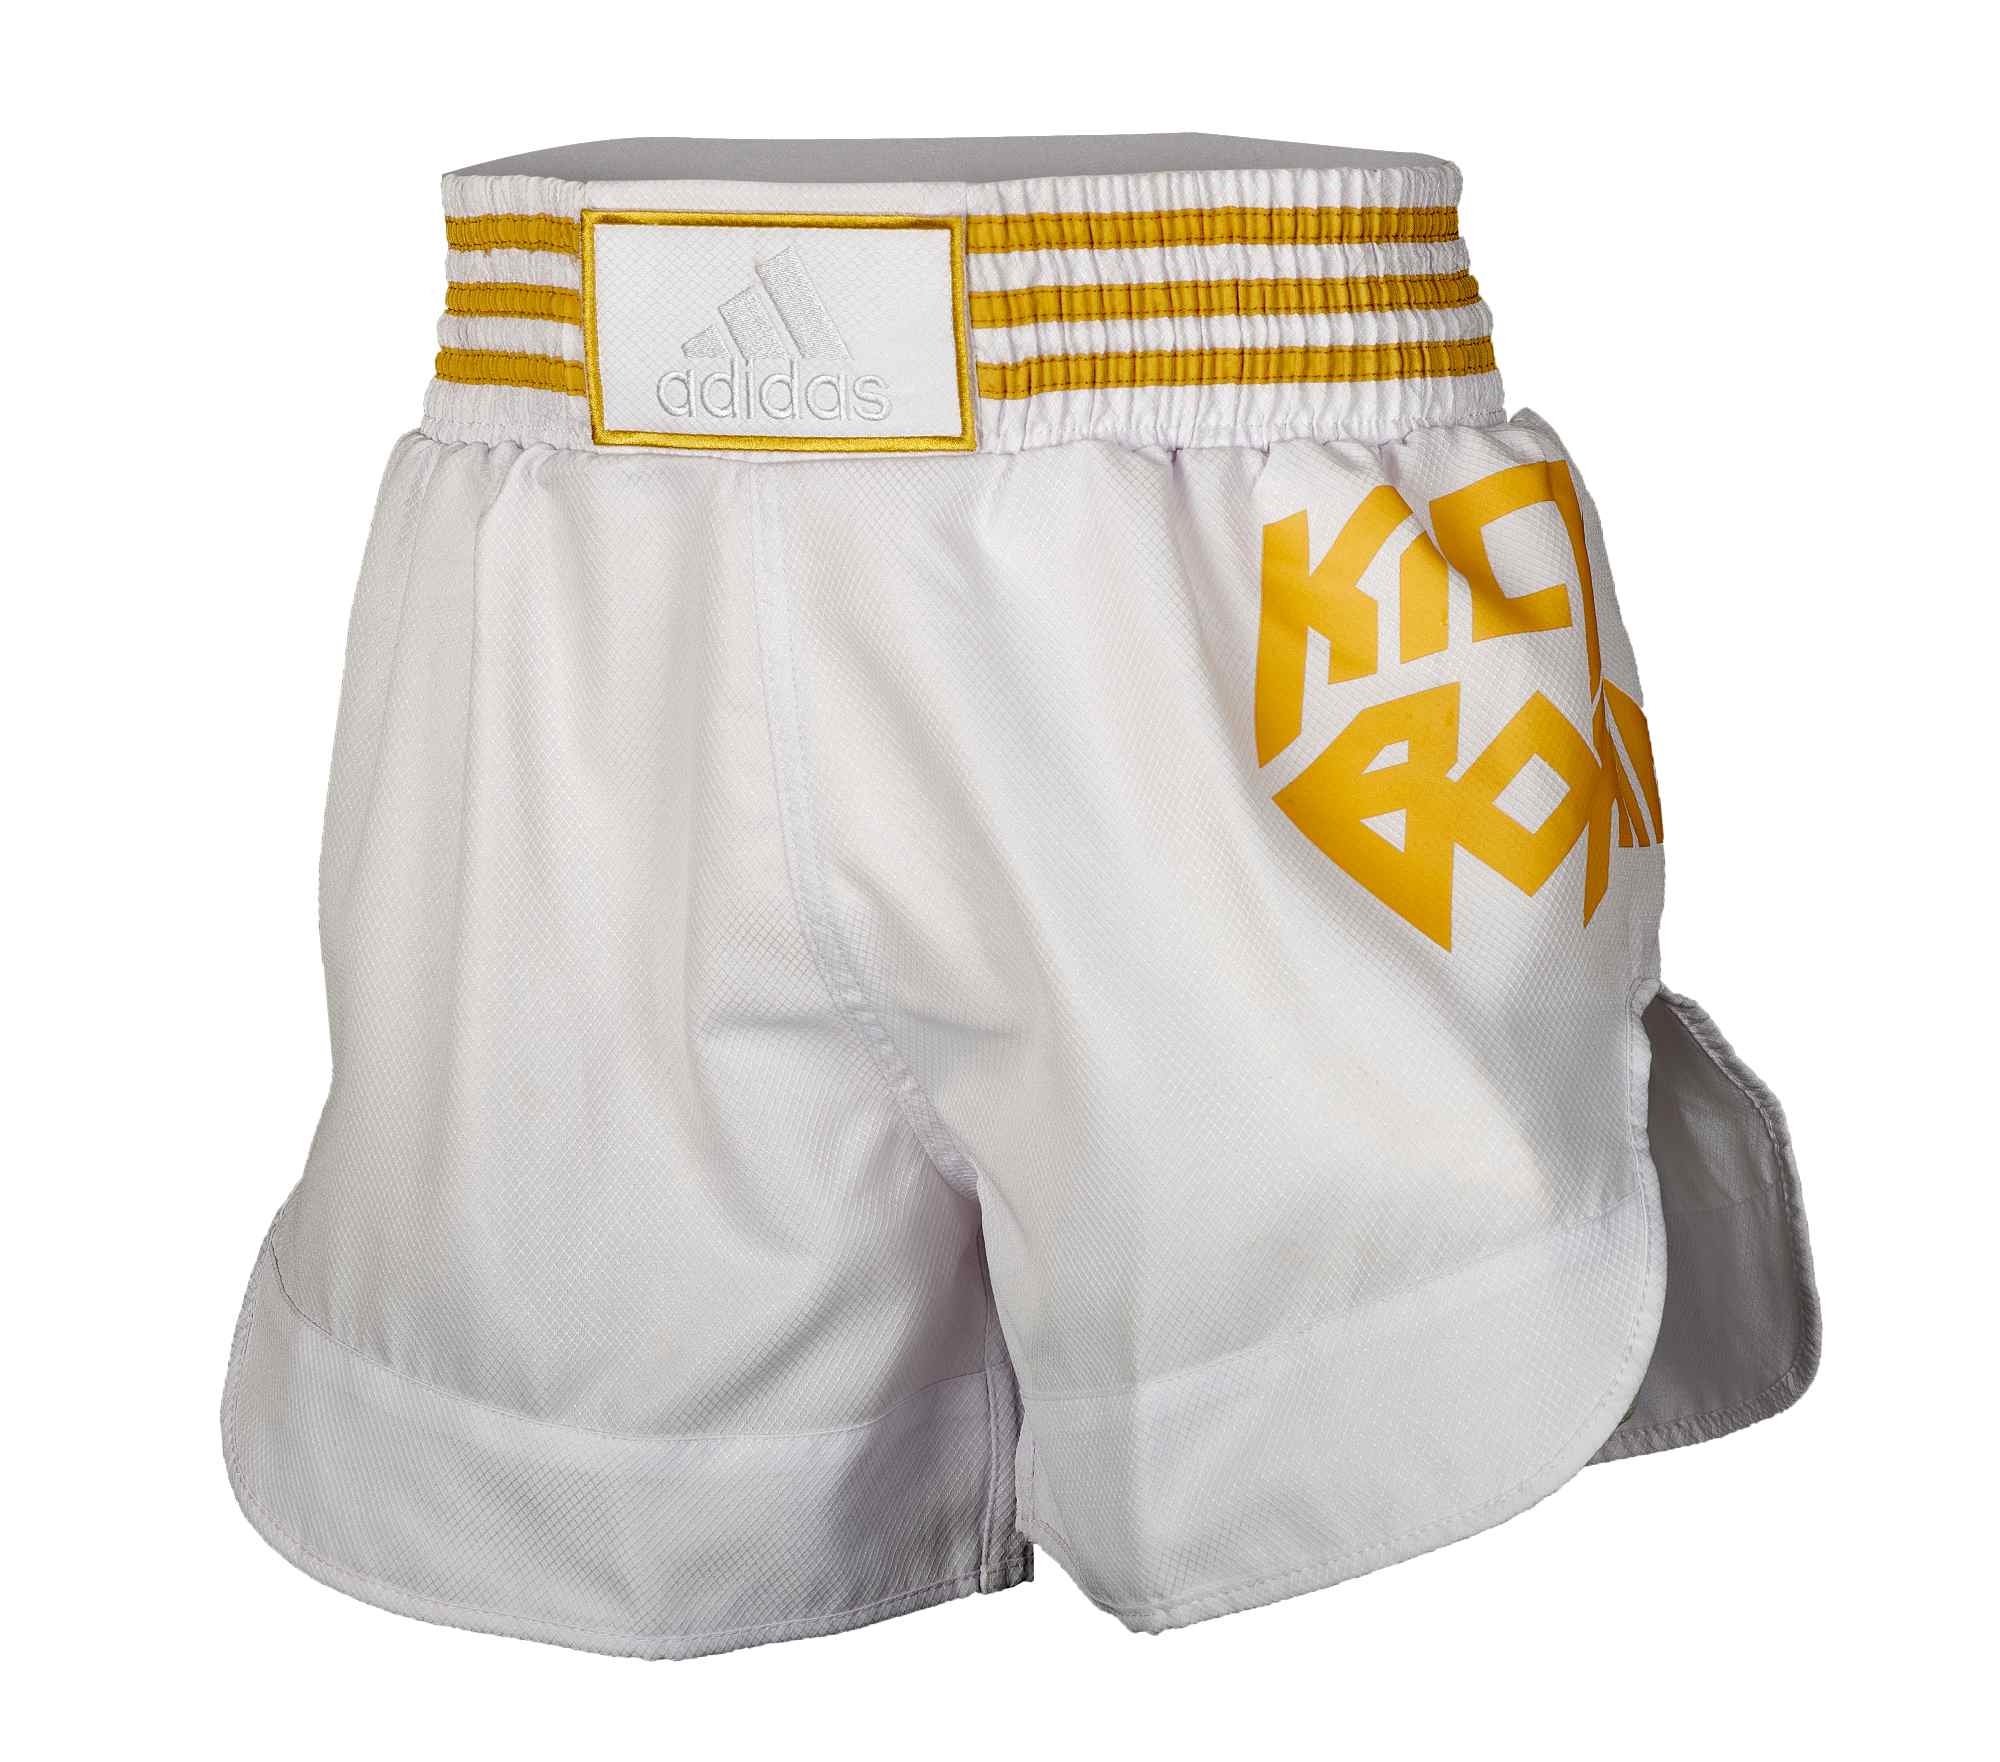 adidas Kick Boxing Shorts white/gold, ADISKB02